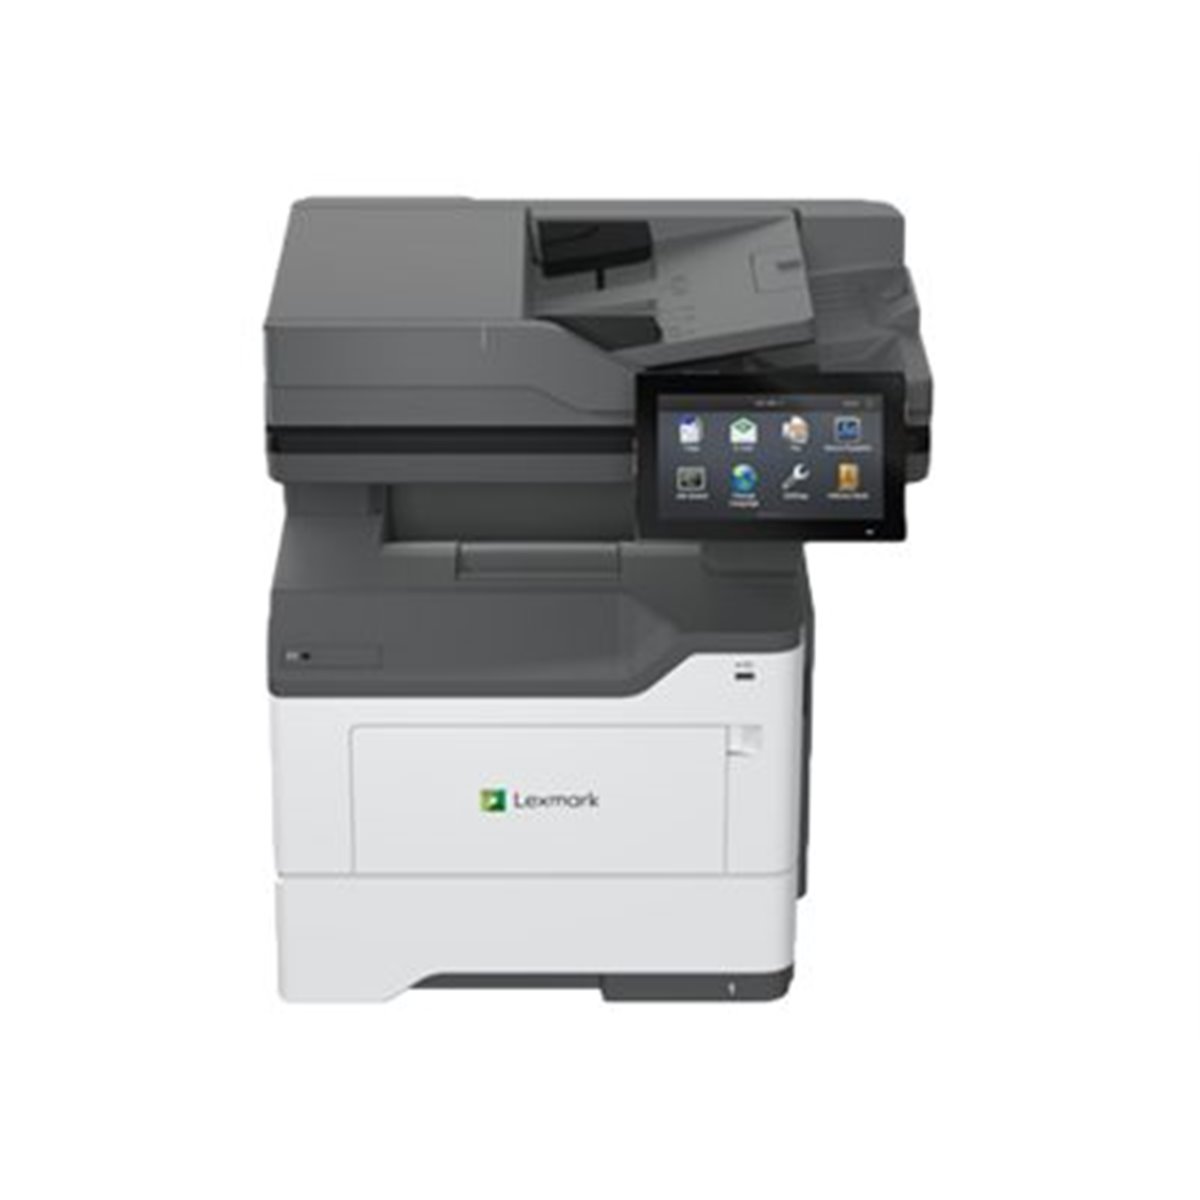 Lexmark MX632adwe Monochrome Multifunction Printer HV EMEA 47ppm - Printer